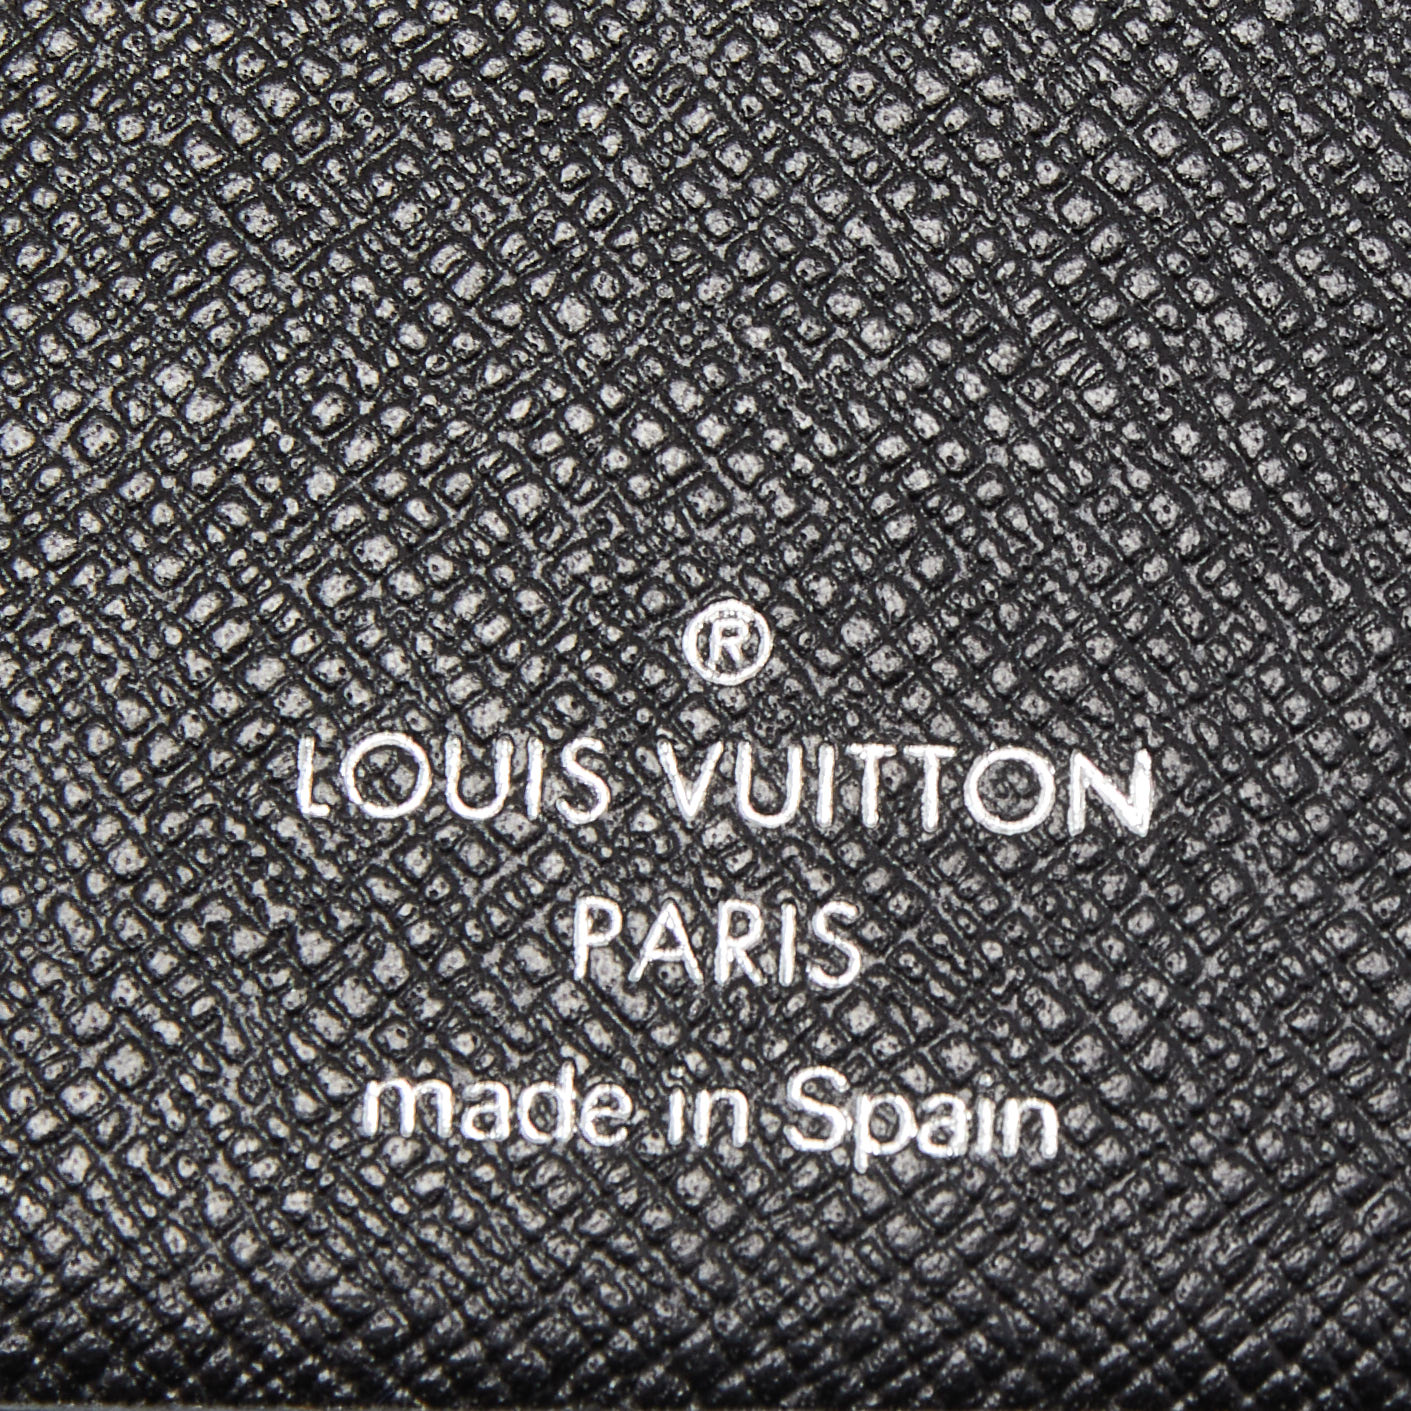 Louis Vuitton Black Taiga Leather Bifold Wallet